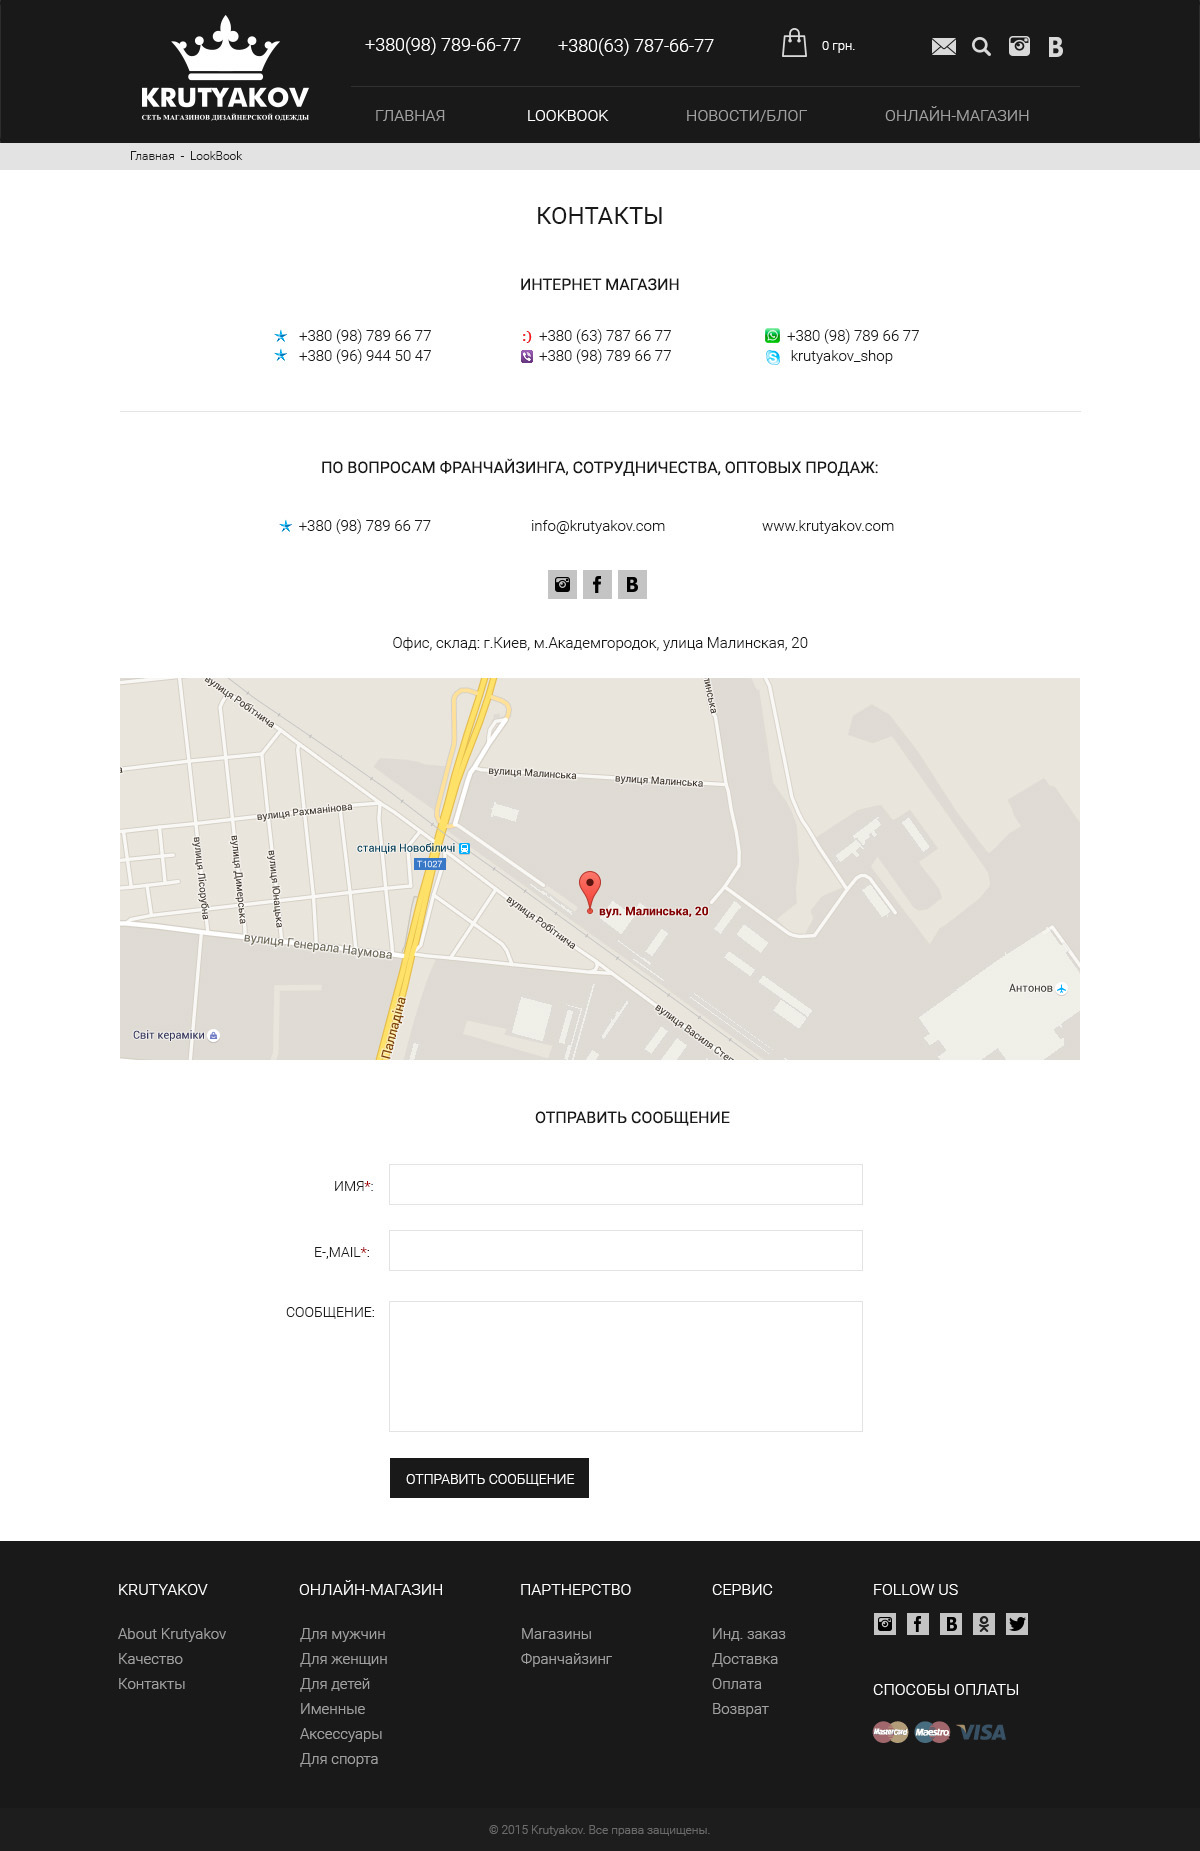 Contact page design of Krytakov website